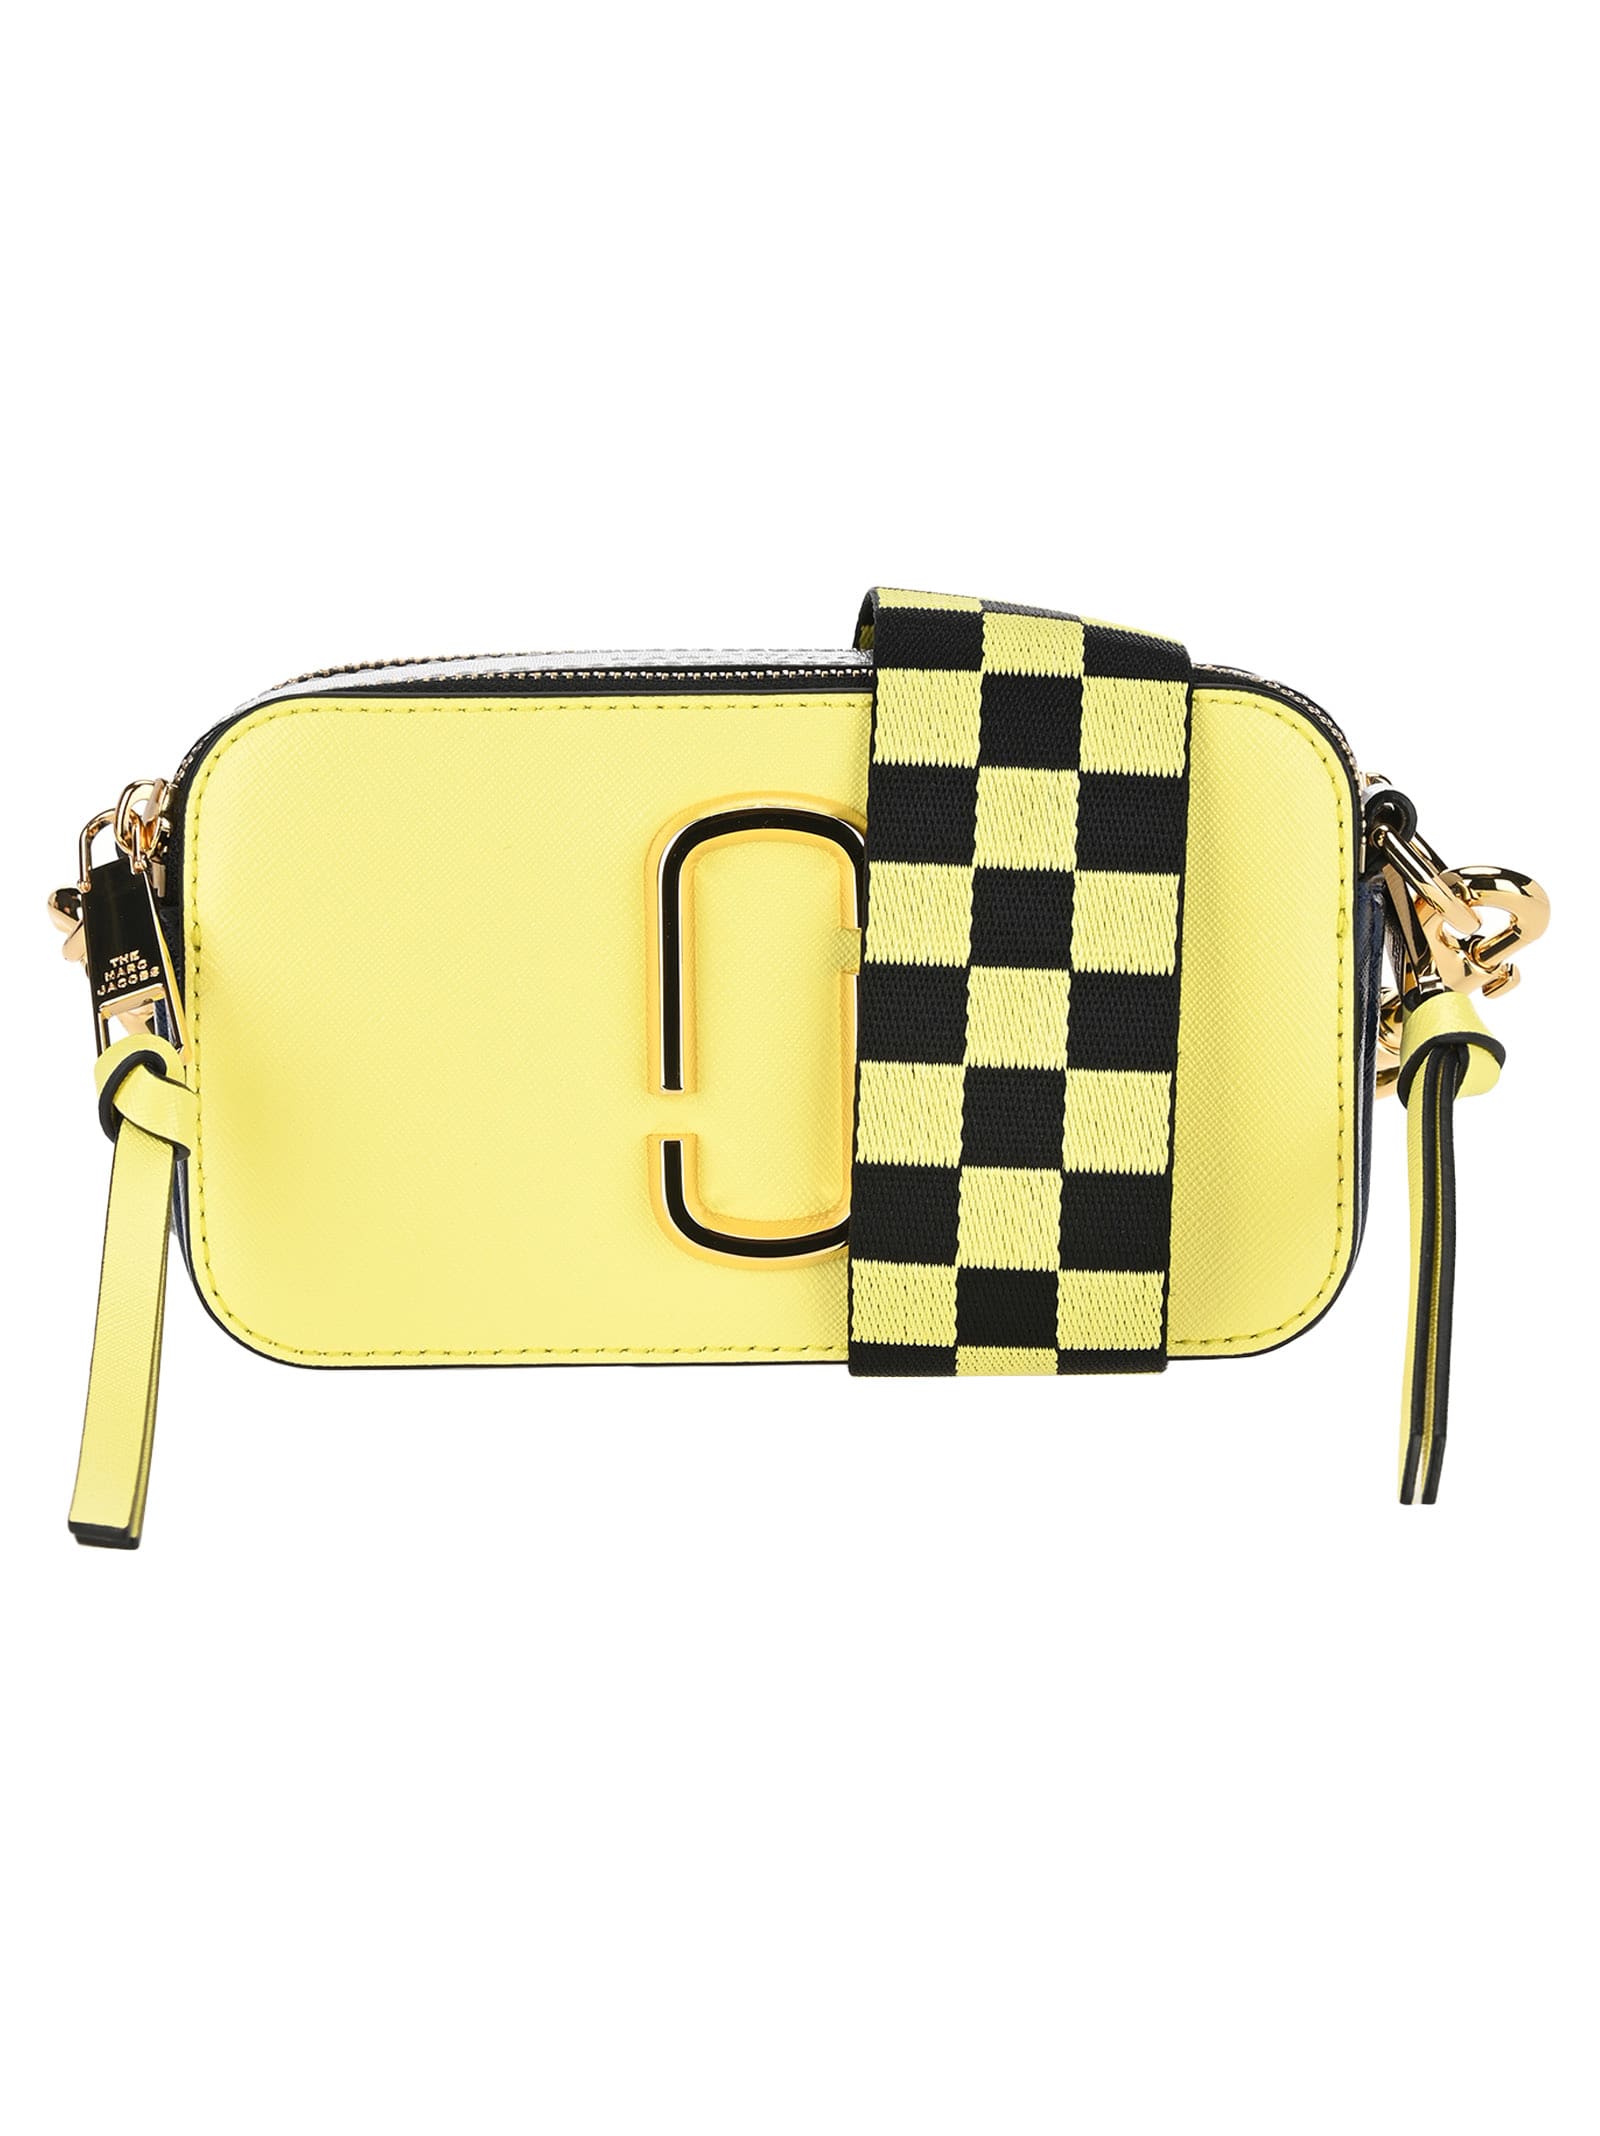 Marc by Marc Jacobs Yellow Leather Natasha Mini Crossbody Purse Bag | eBay